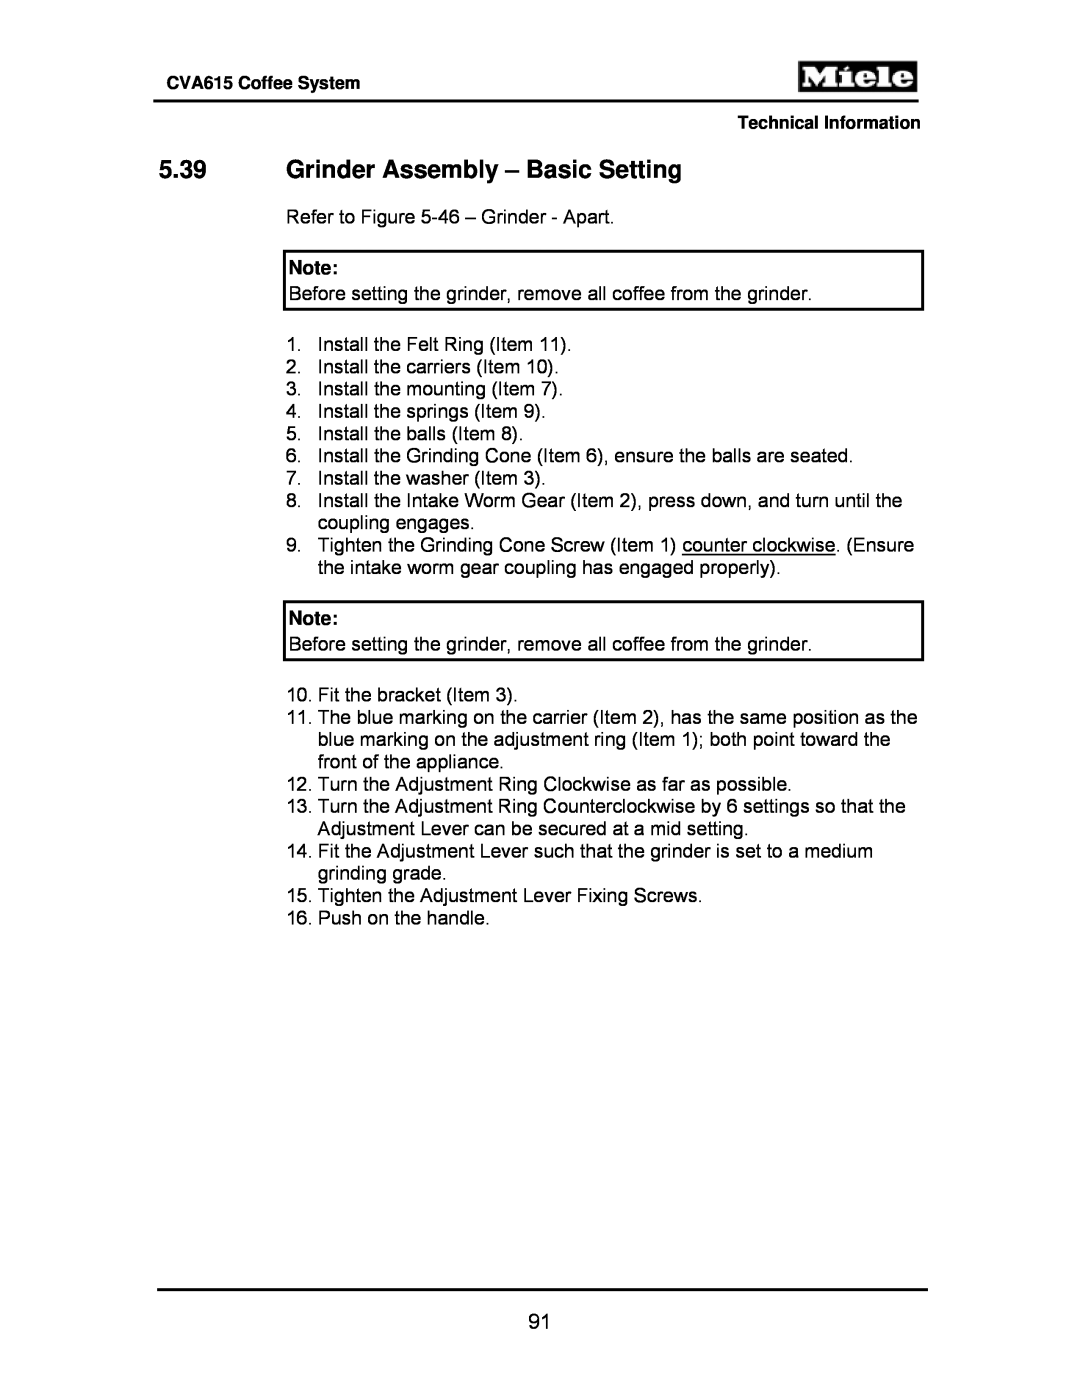 Miele CVA615 manual 5.39Grinder Assembly – Basic Setting 